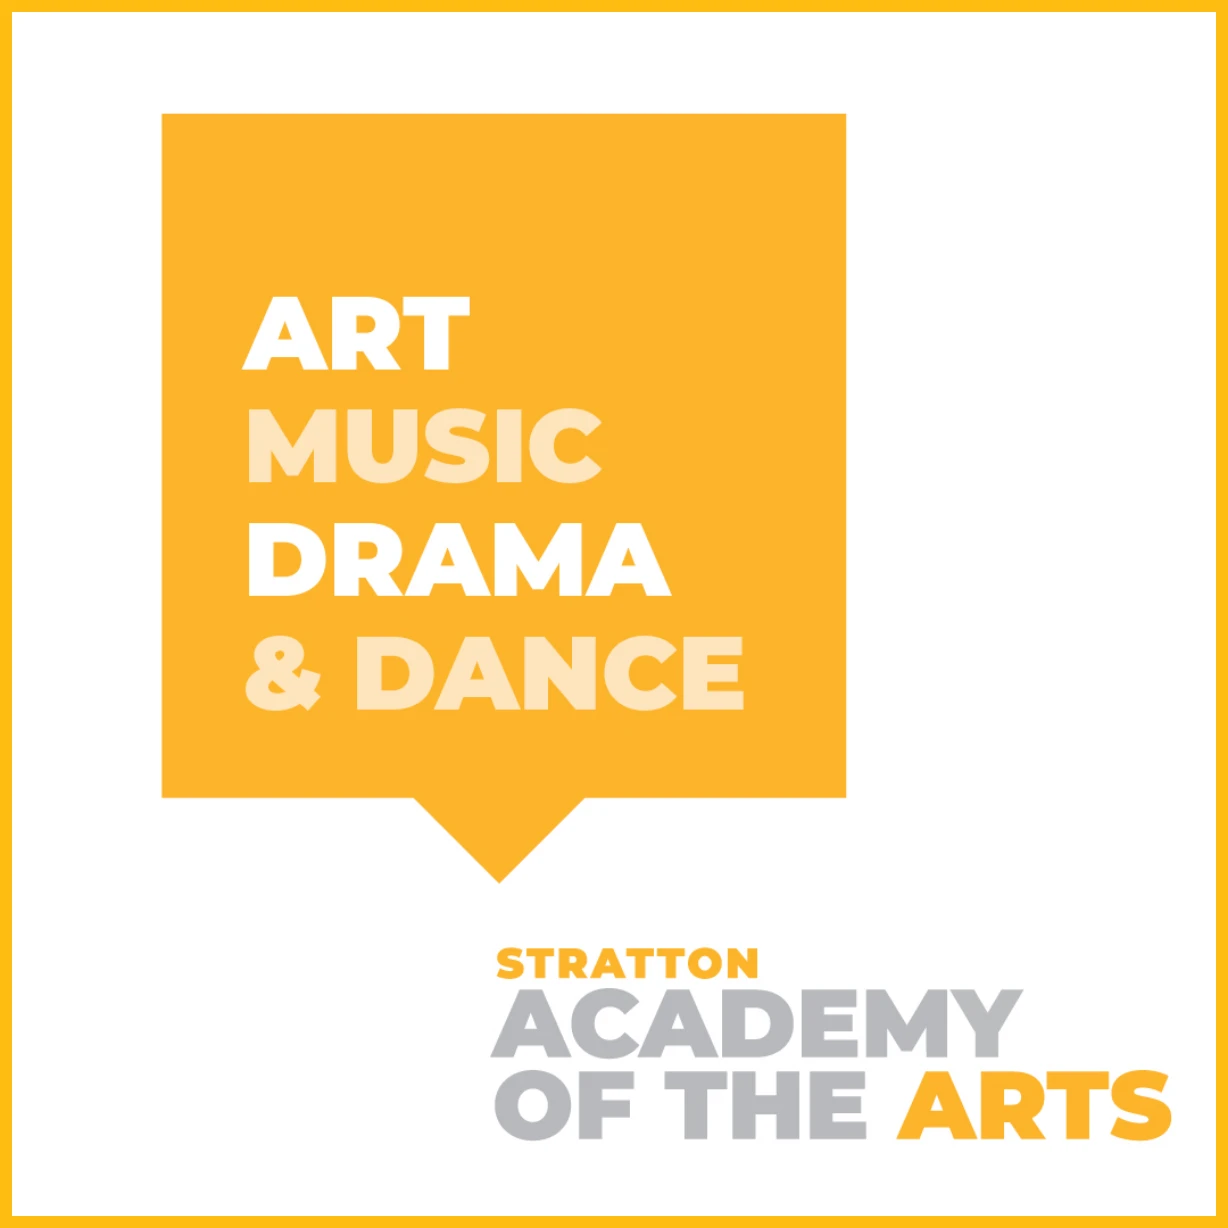 Art music drama & dance academy of the arts.